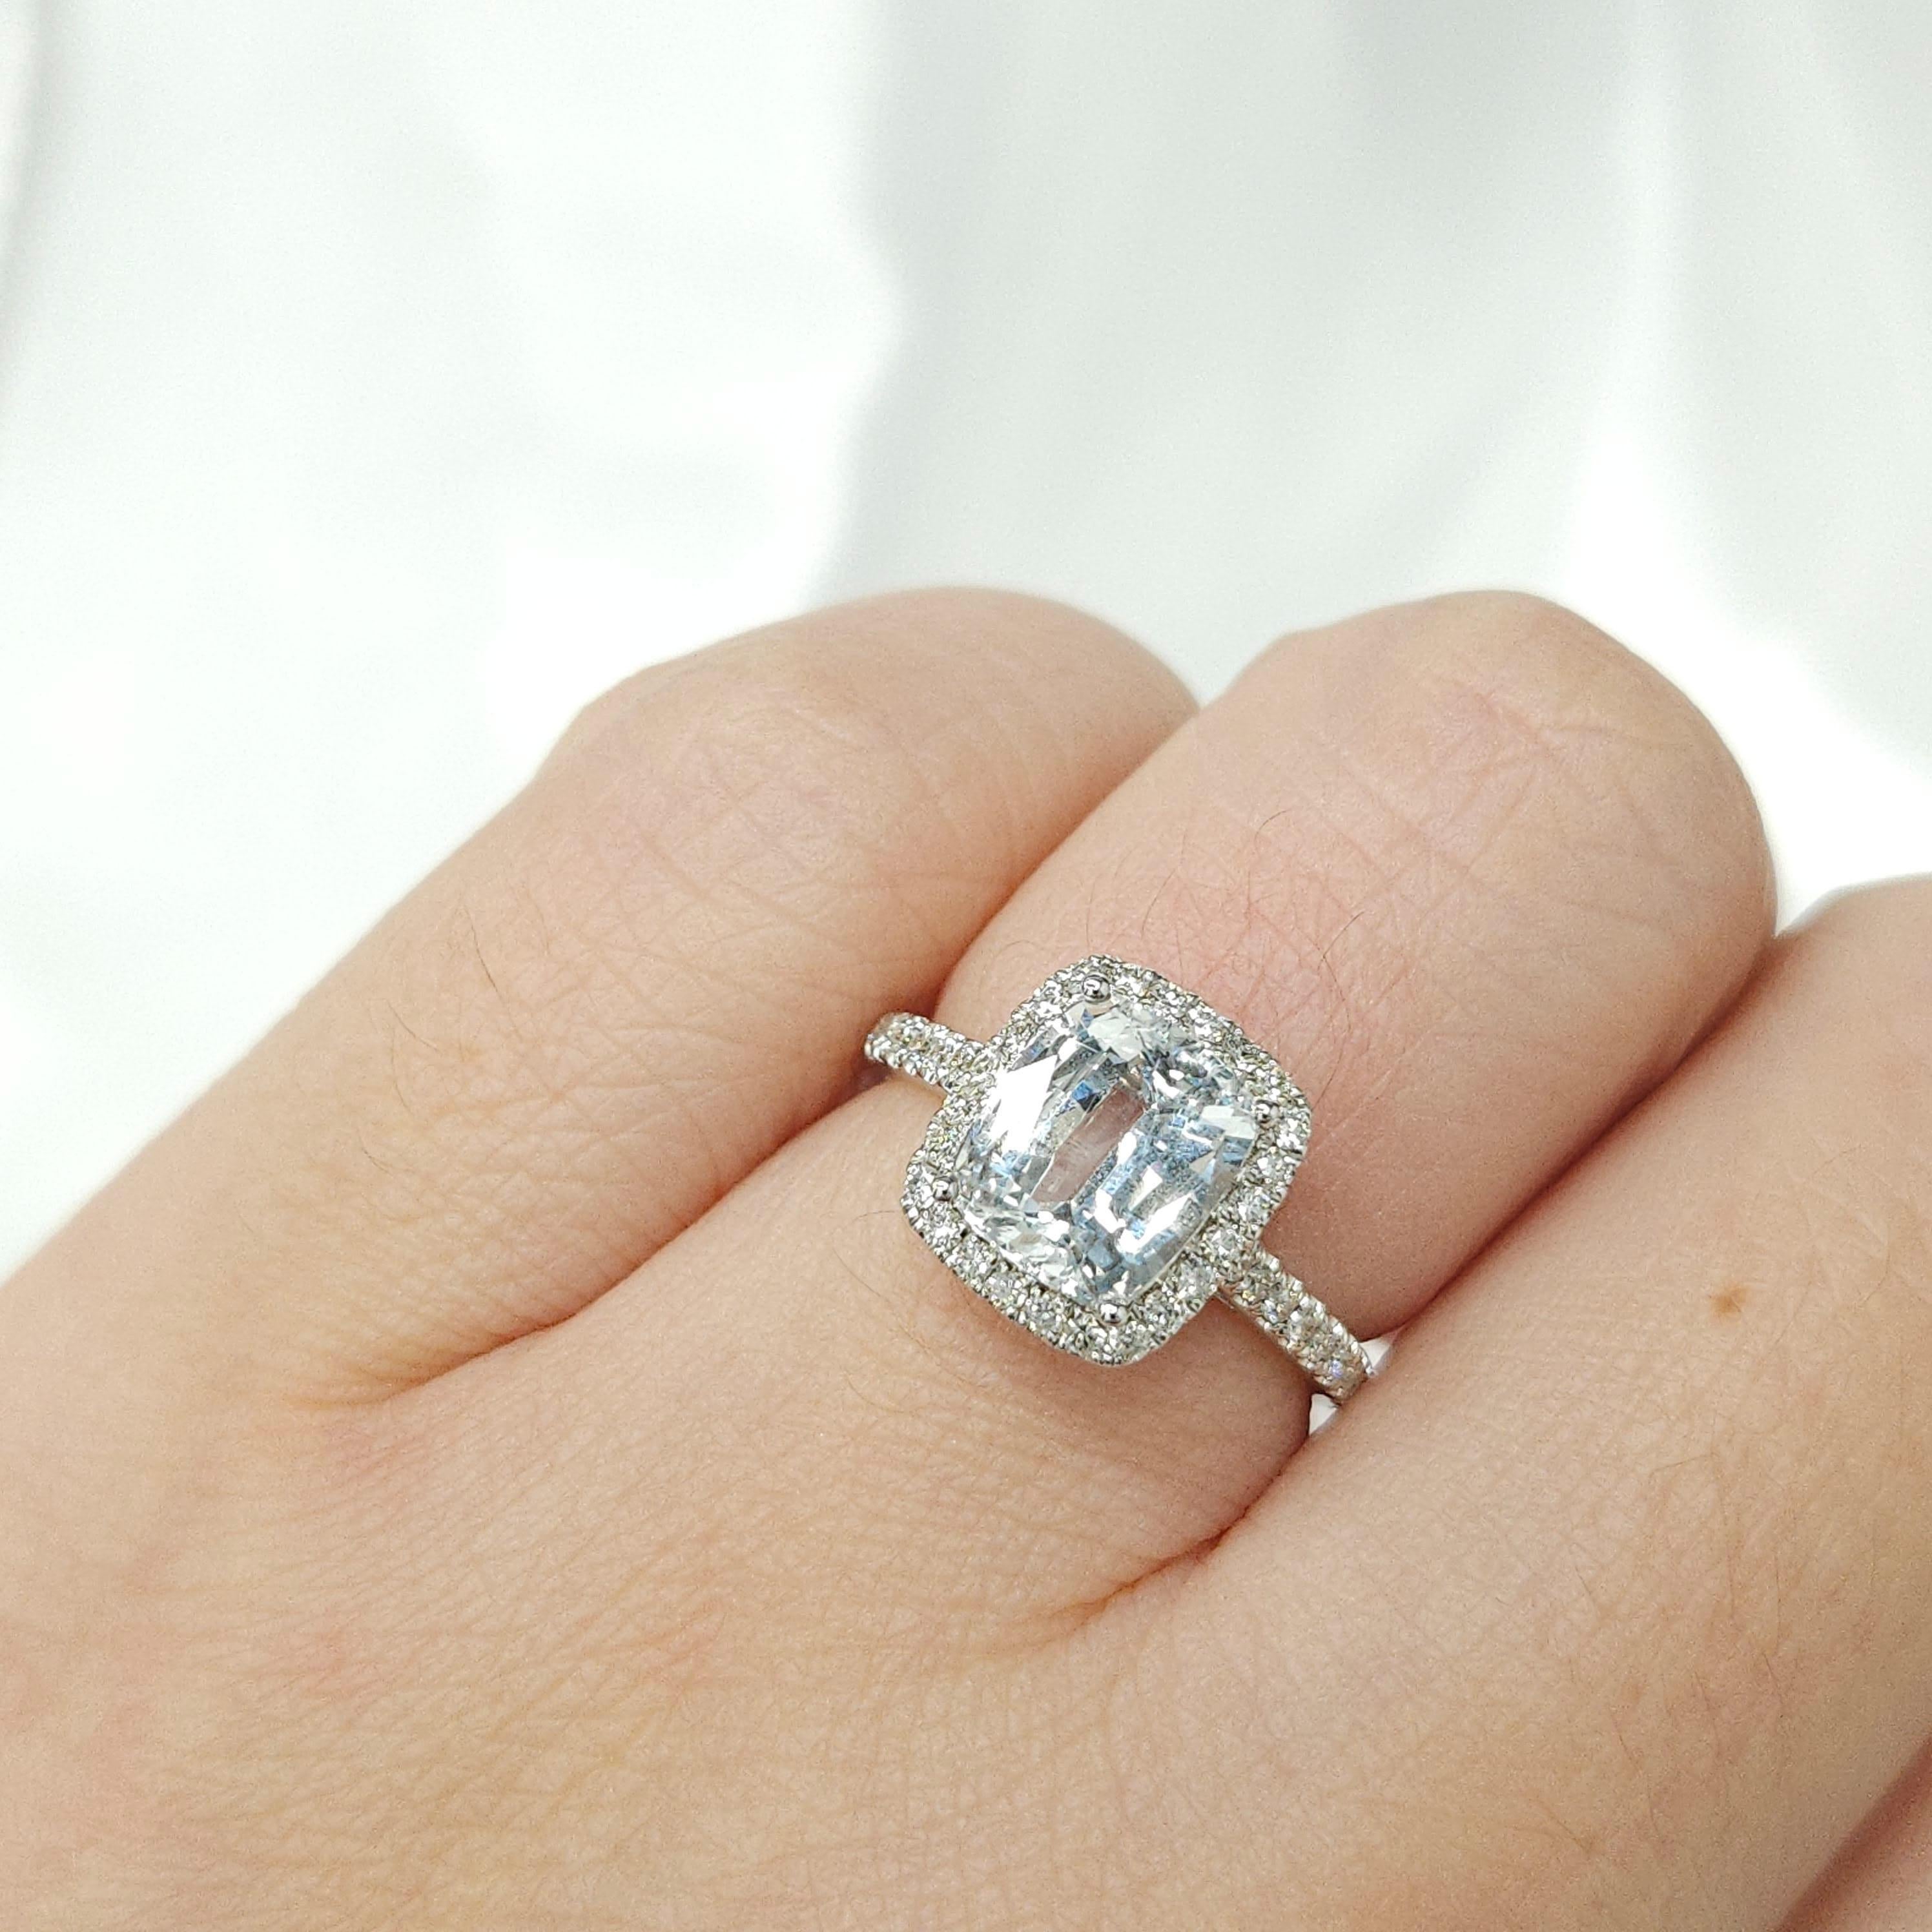 IGI Certified 2.35 Carat Unheated Sapphire & Diamond Ring in 18K WhiteGold For Sale 1